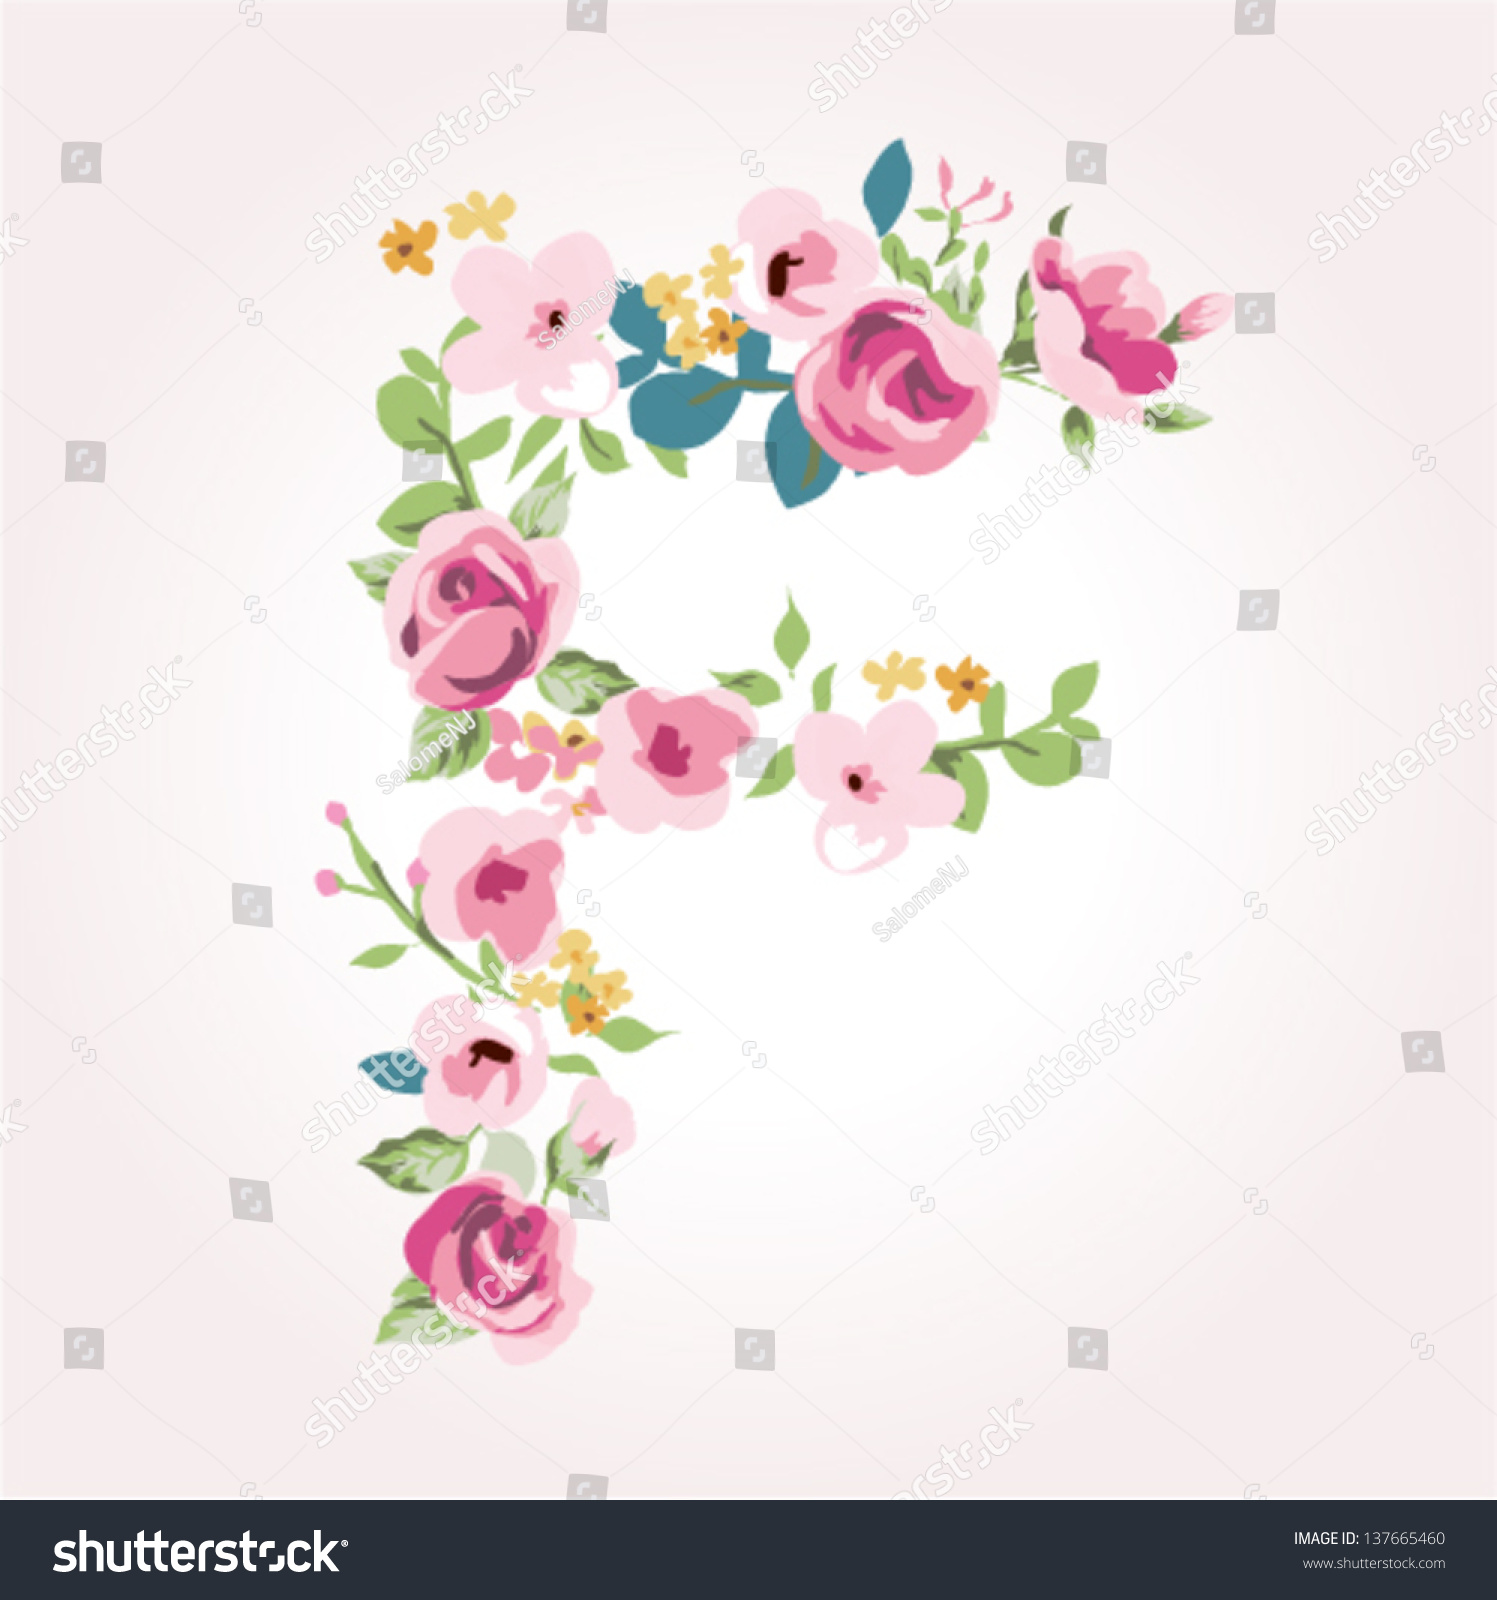 Vector Flower Fontcapital F Stock Vector 137665460 - Shutterstock